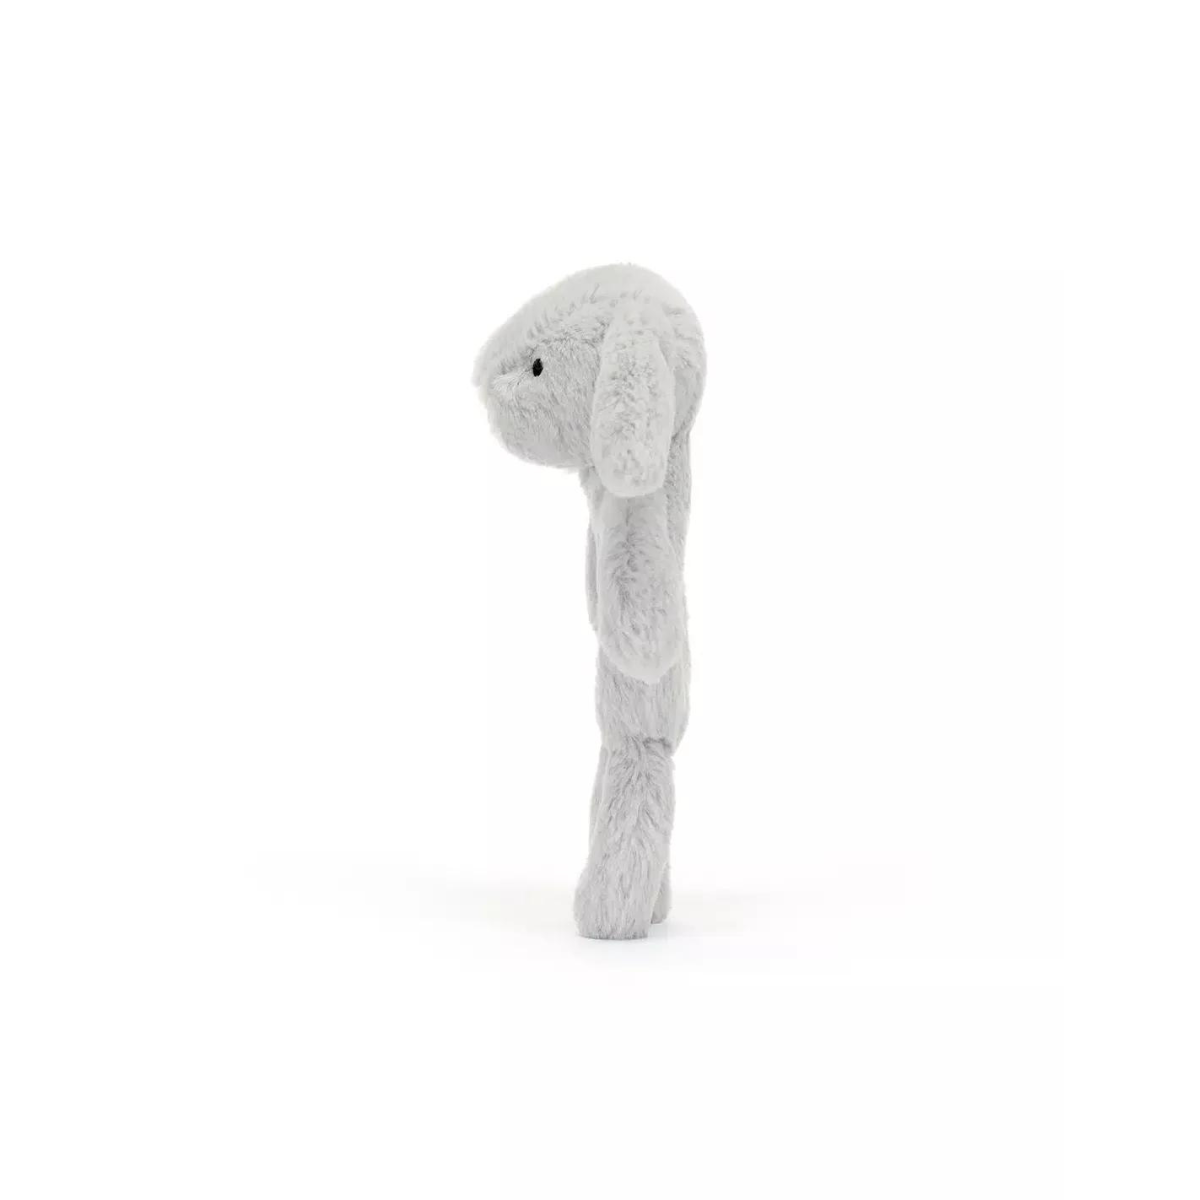 Jellycat: grzechotka króliczek srebrny Bashful Bunny Ring Rattle 18 cm